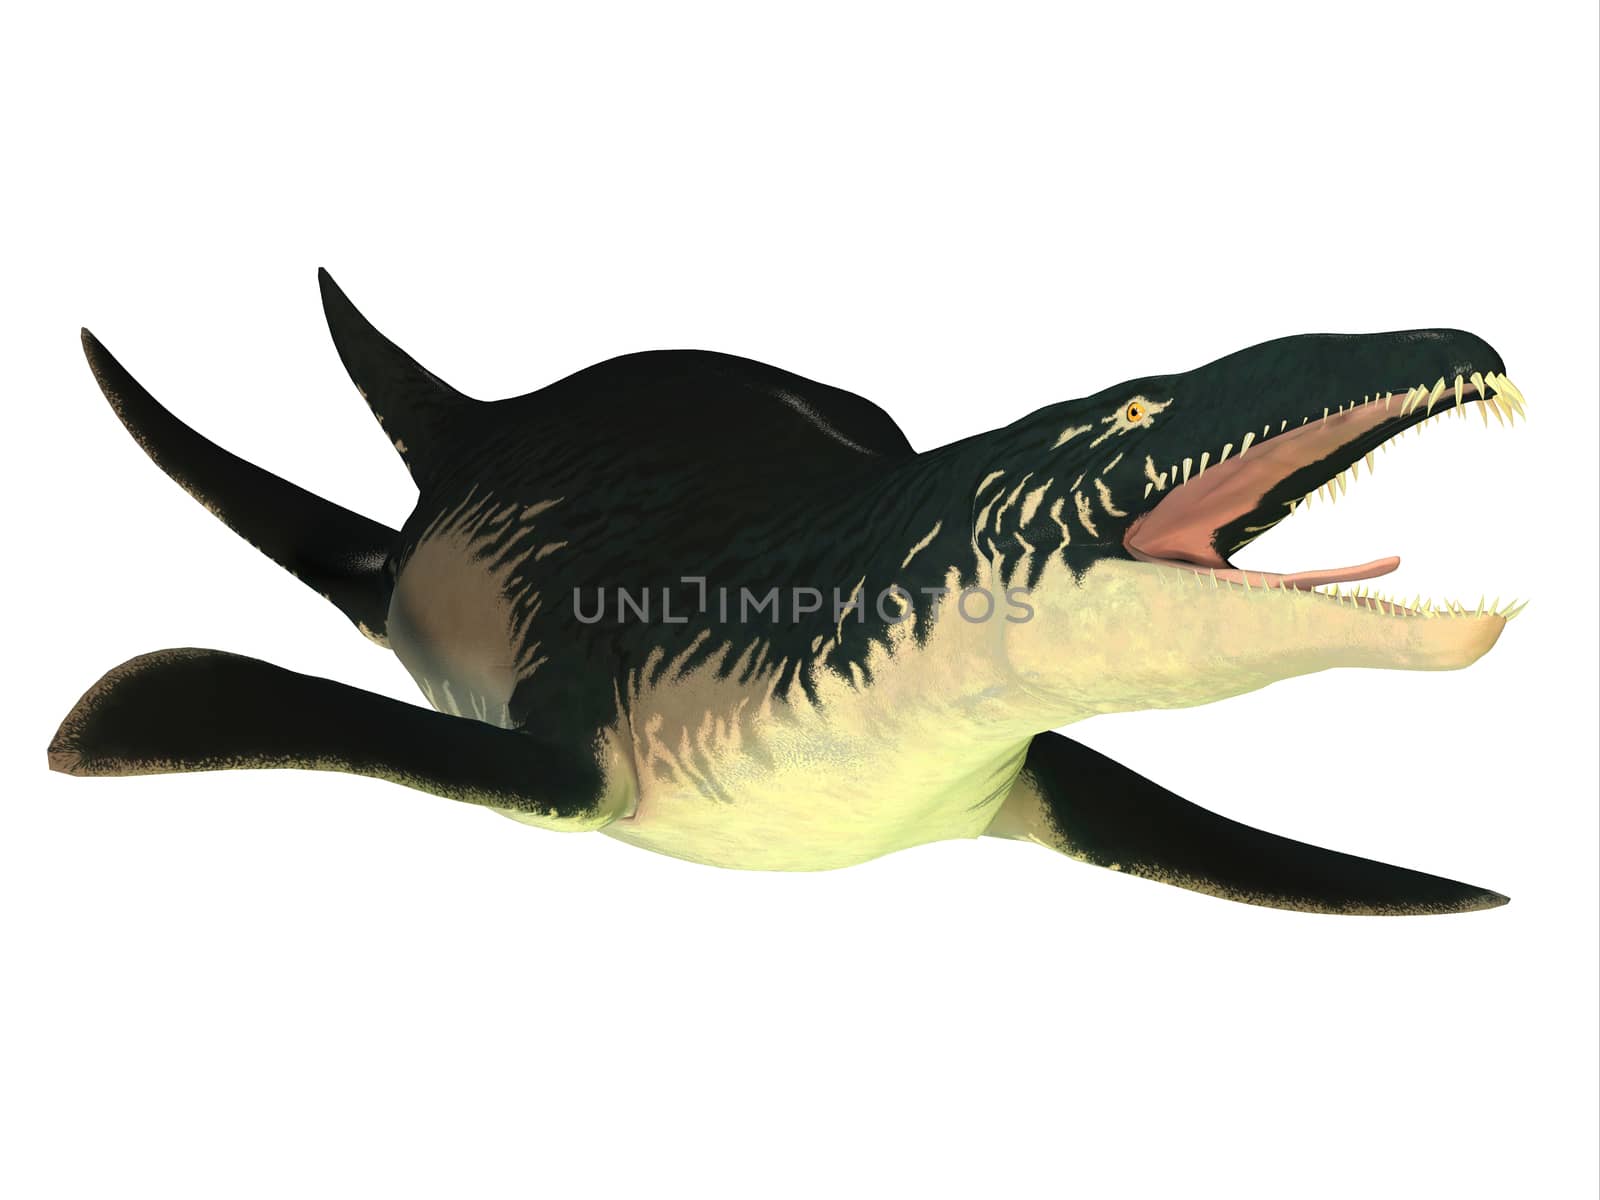 Liopleurodon Marine Reptile by Catmando